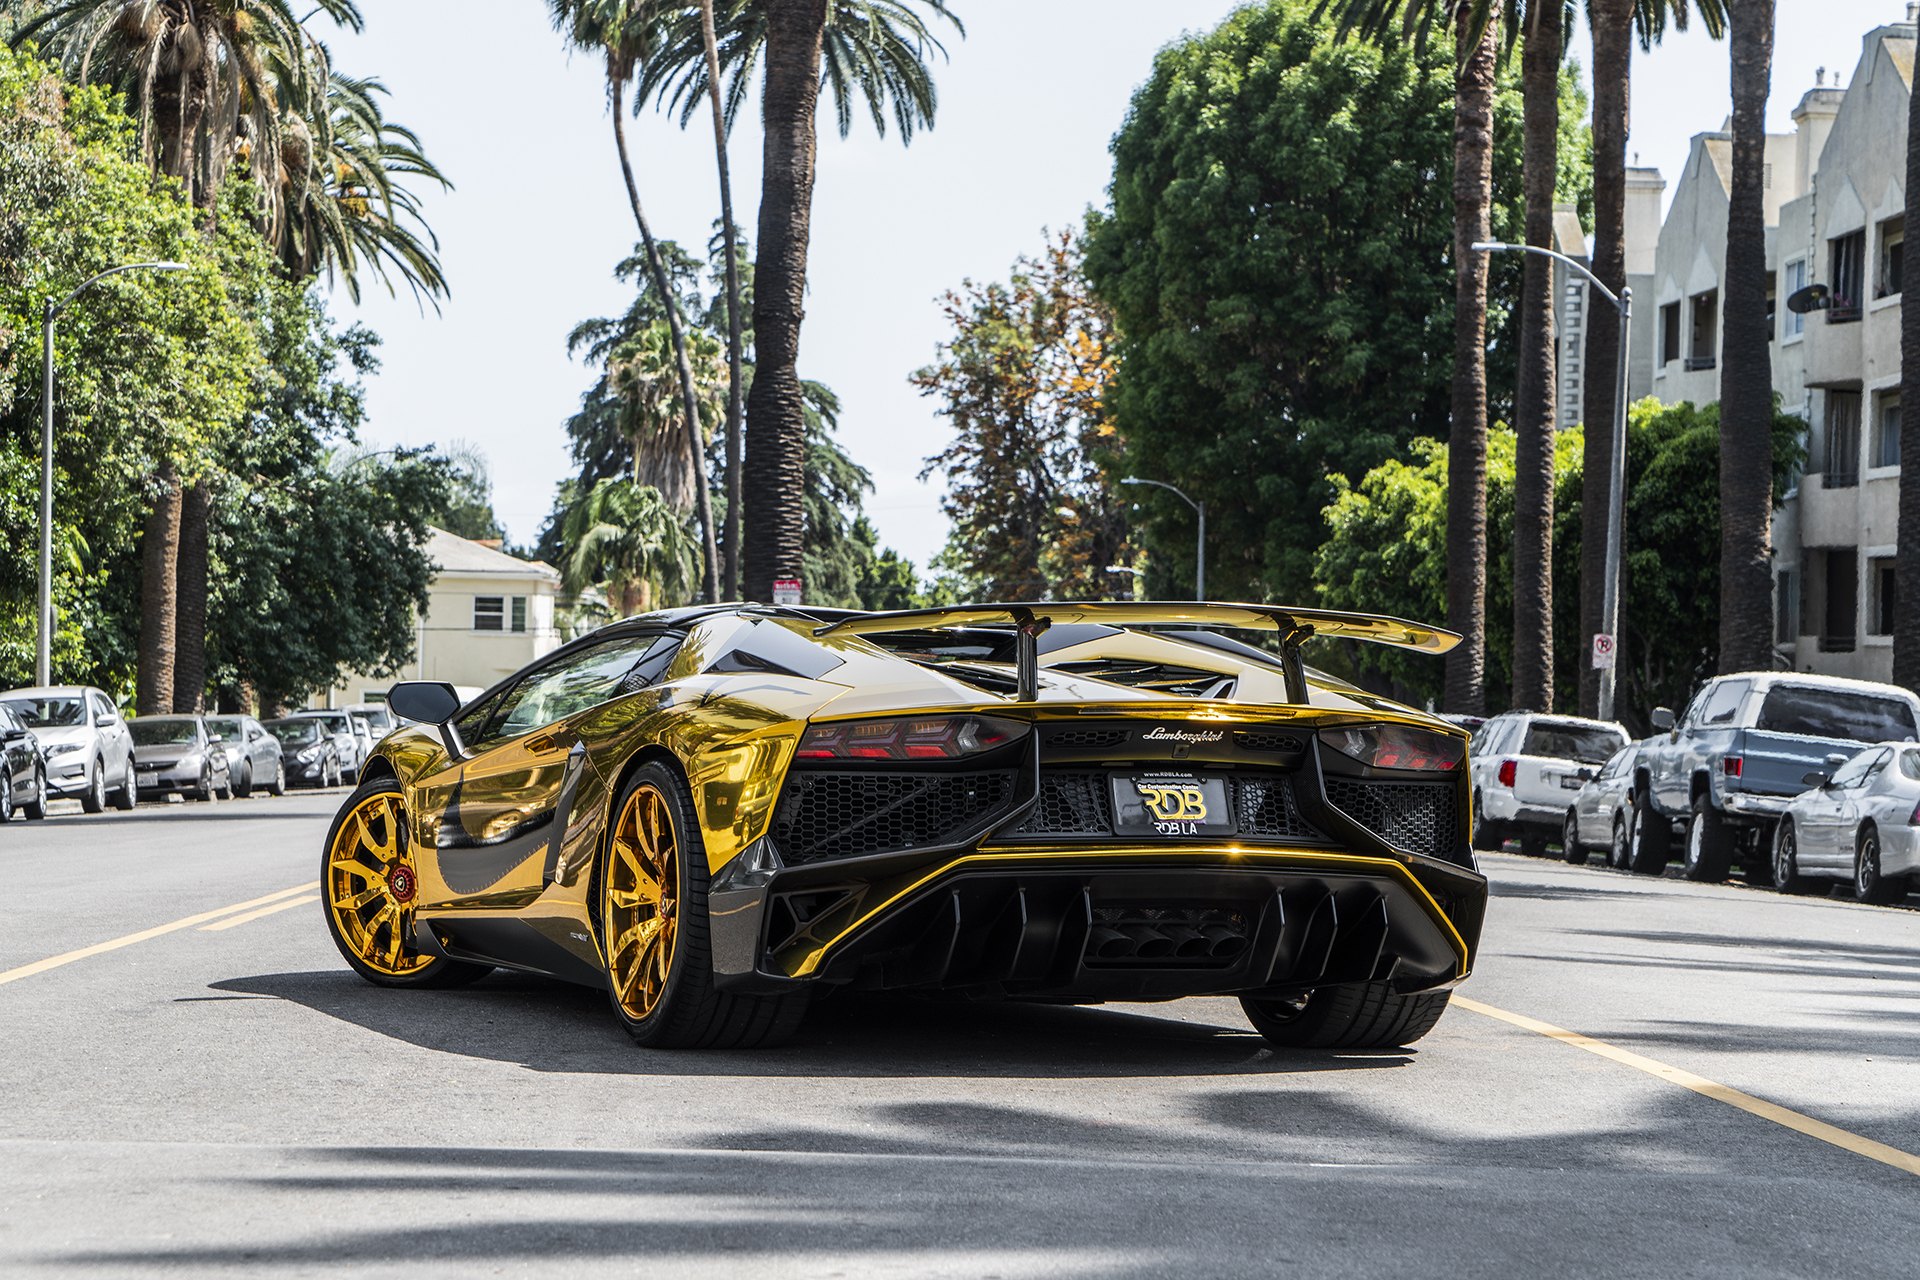 Large Wing Spoiler on Gold Wrapped Lamborghini Aventador - Photo by Forgiato